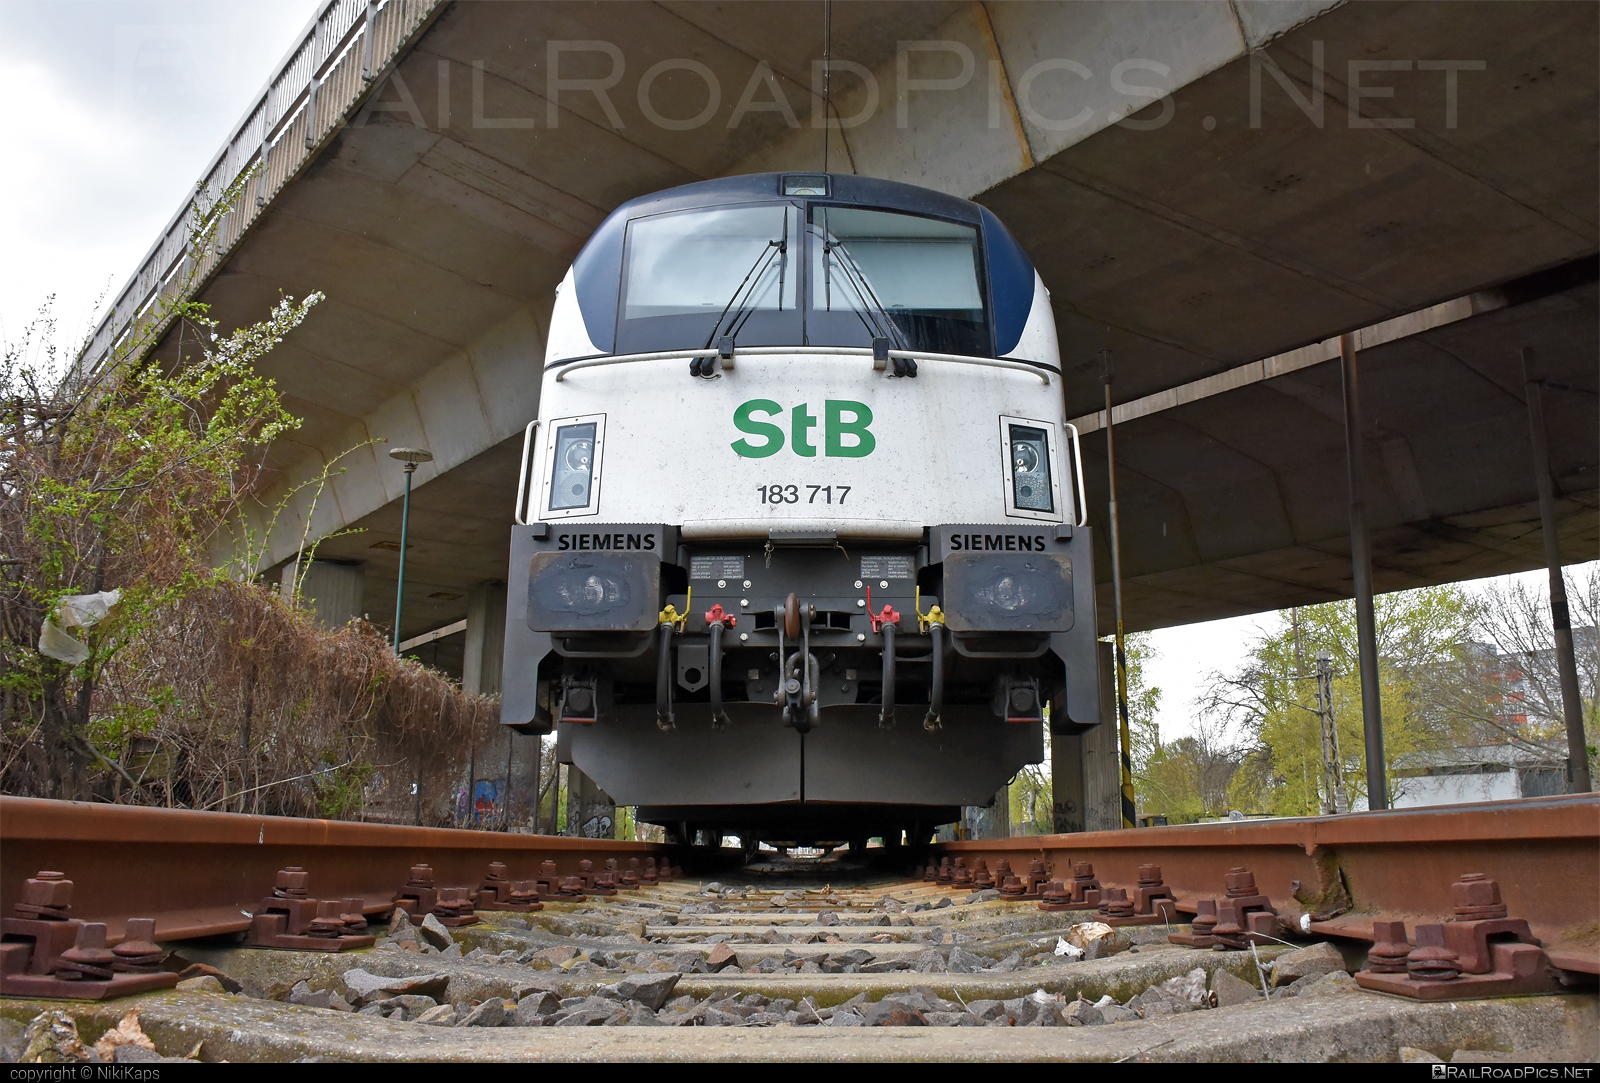 Siemens ES 64 U4 - 183 717 operated by Steiermarkbahn Transport & Logistik GmbH #es64 #es64u4 #eurosprinter #siemens #siemensEs64 #siemensEs64u4 #siemenstaurus #stb #steiermarkbahn #taurus #tauruslocomotive